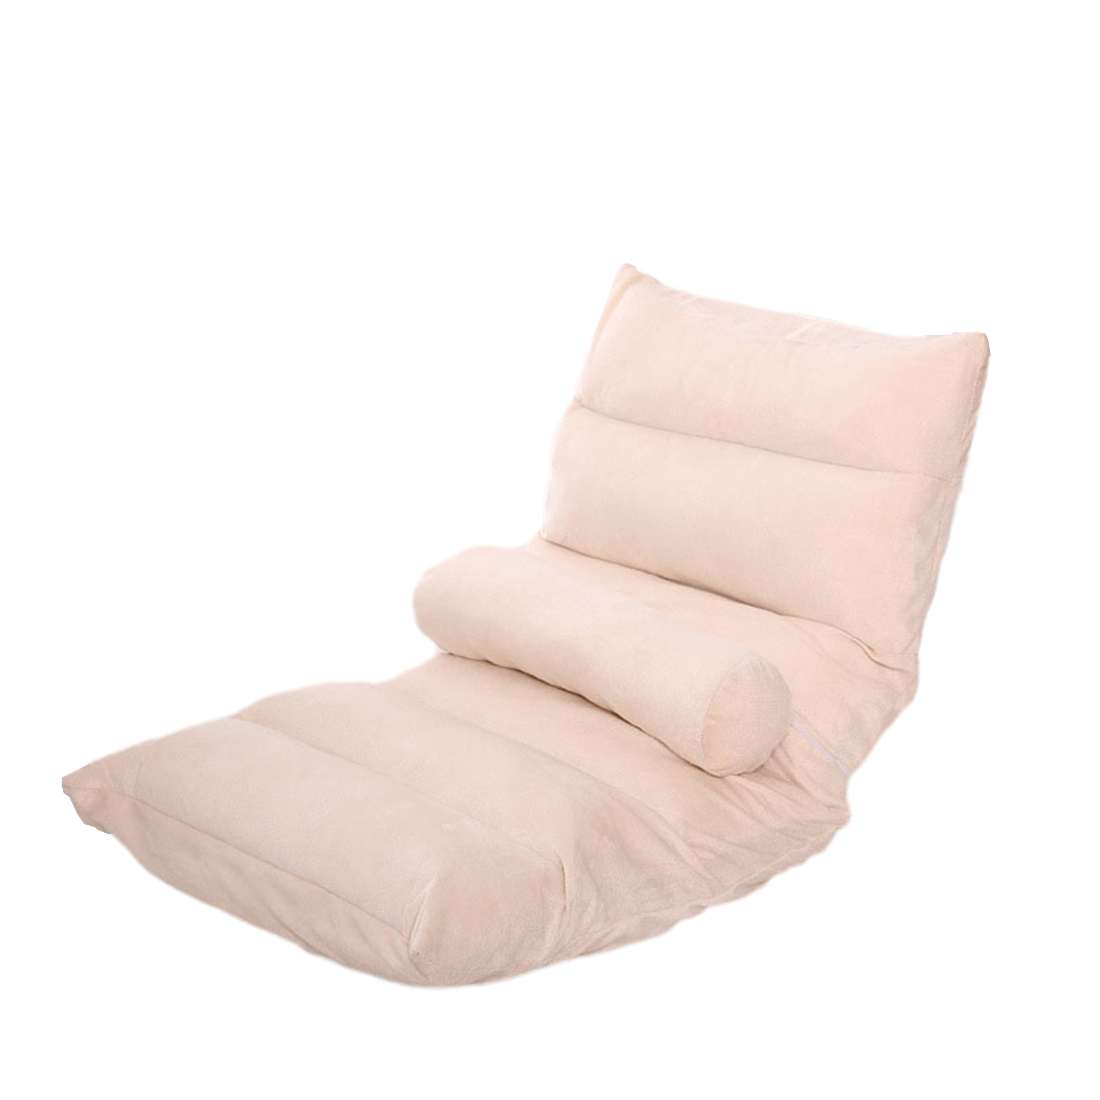 6 plaid cloth rice white ( send waist pillow ) independent liner